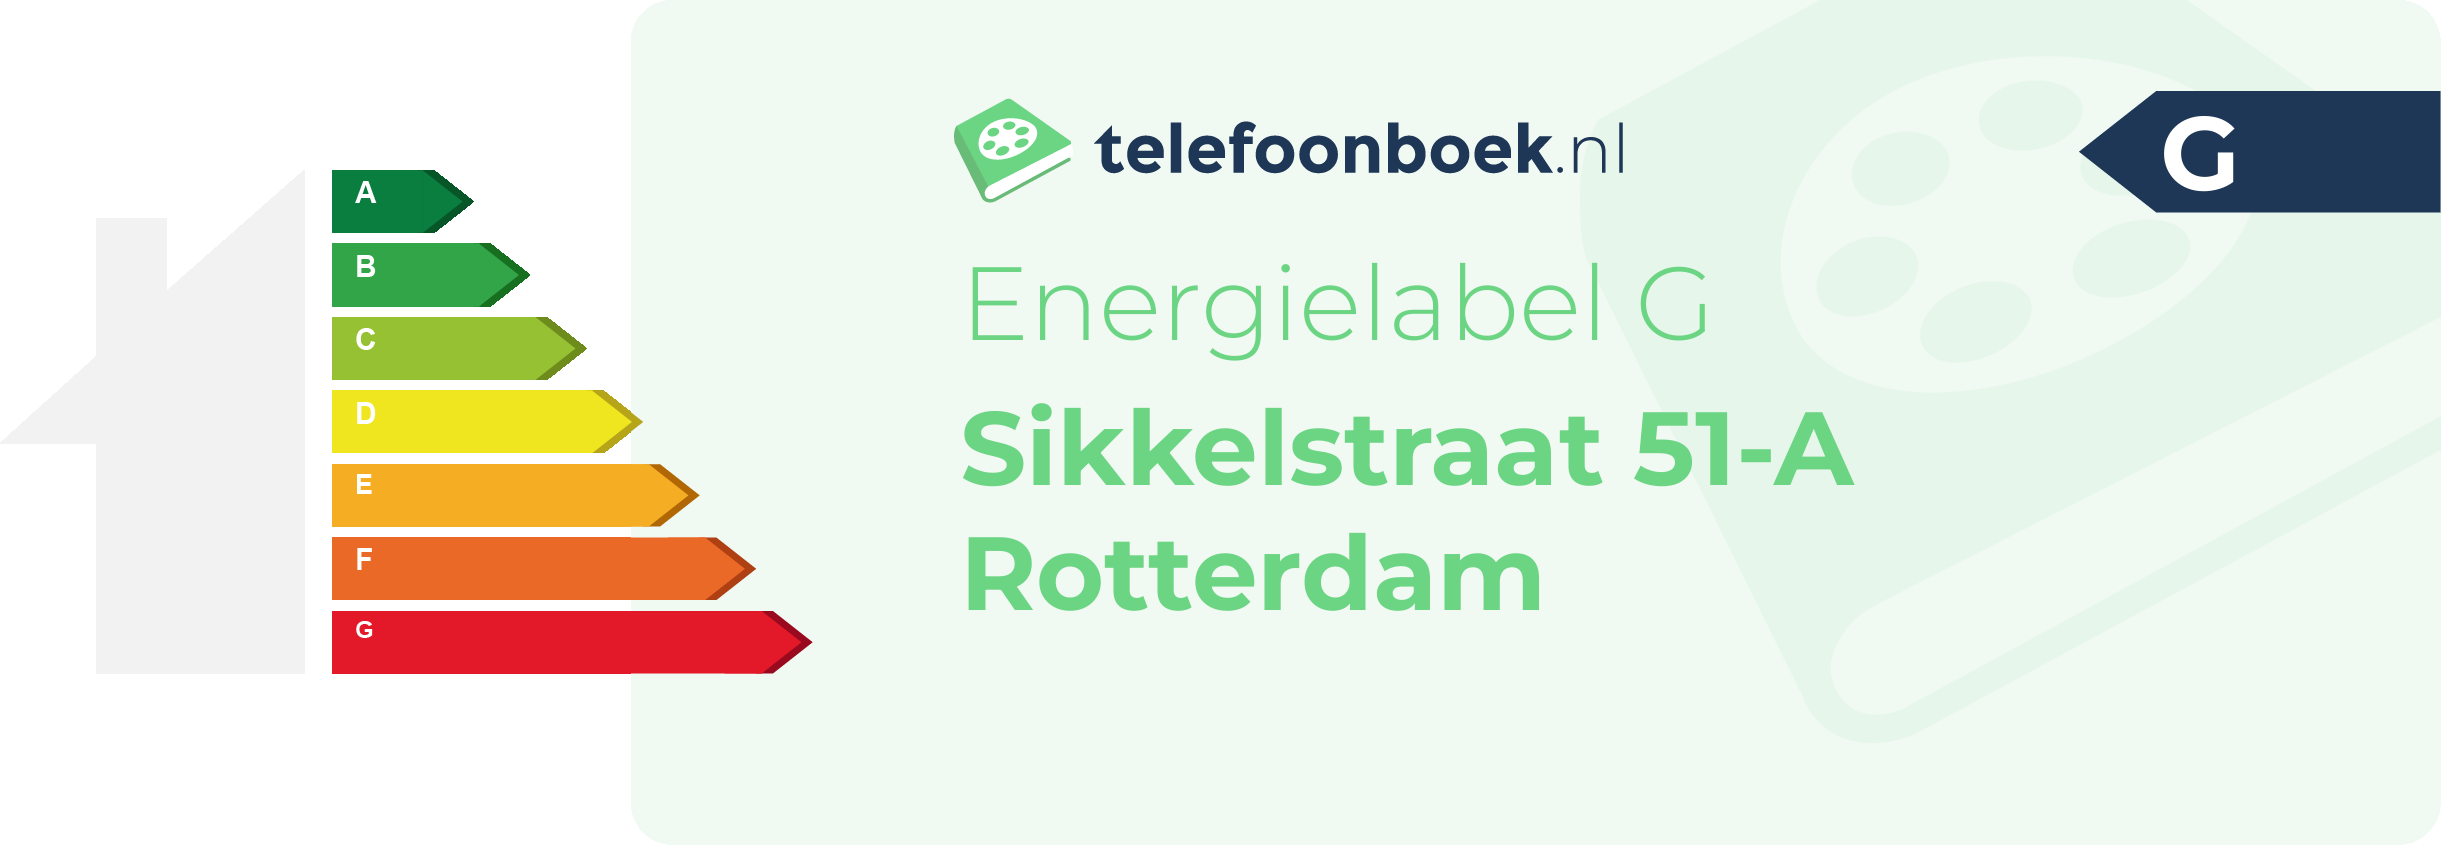 Energielabel Sikkelstraat 51-A Rotterdam